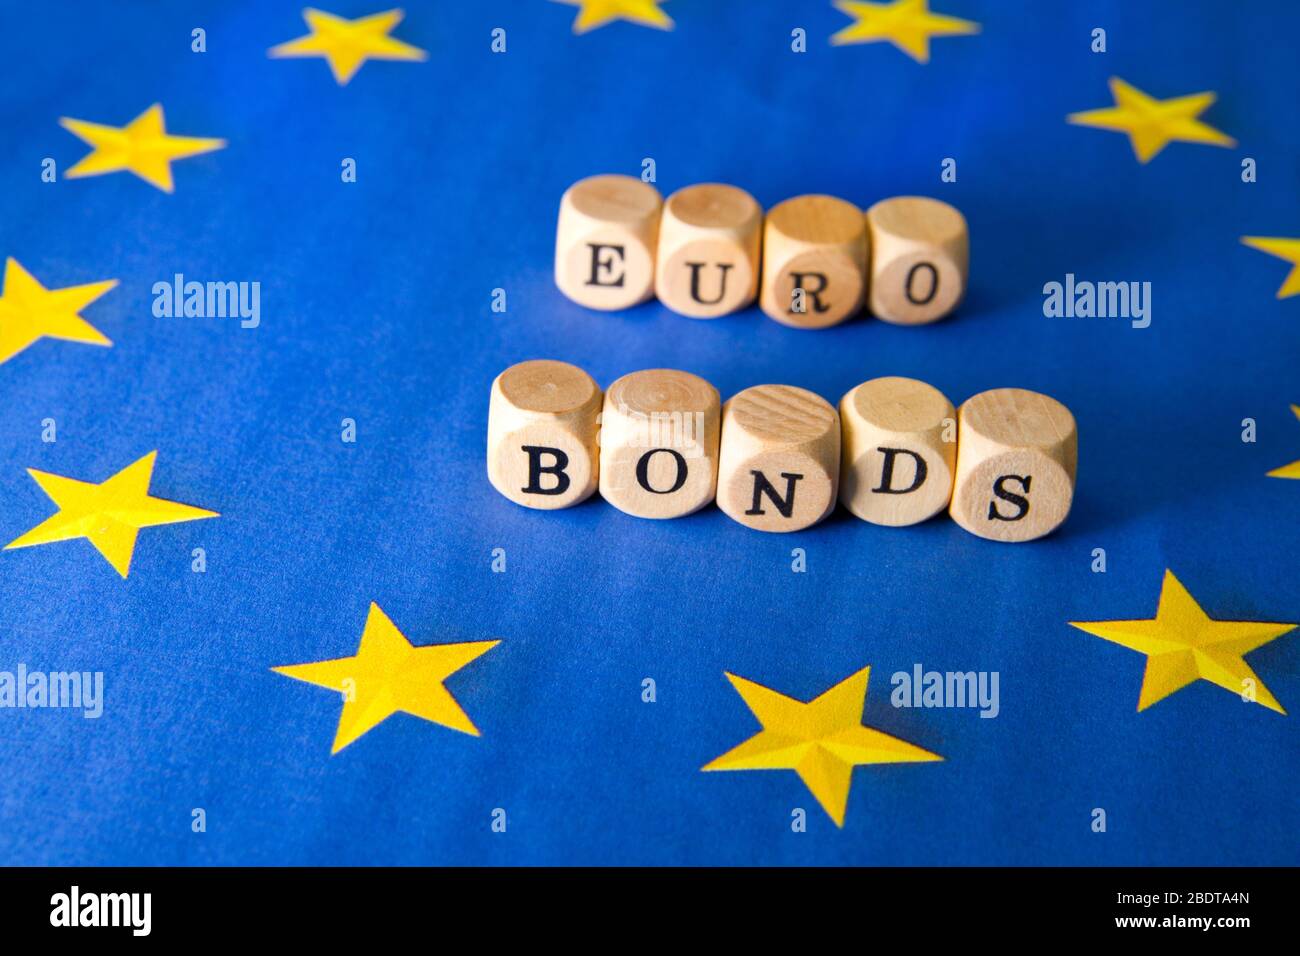 Eurobond und Corona-Anleihen zum Krisenmanagement Foto Stock